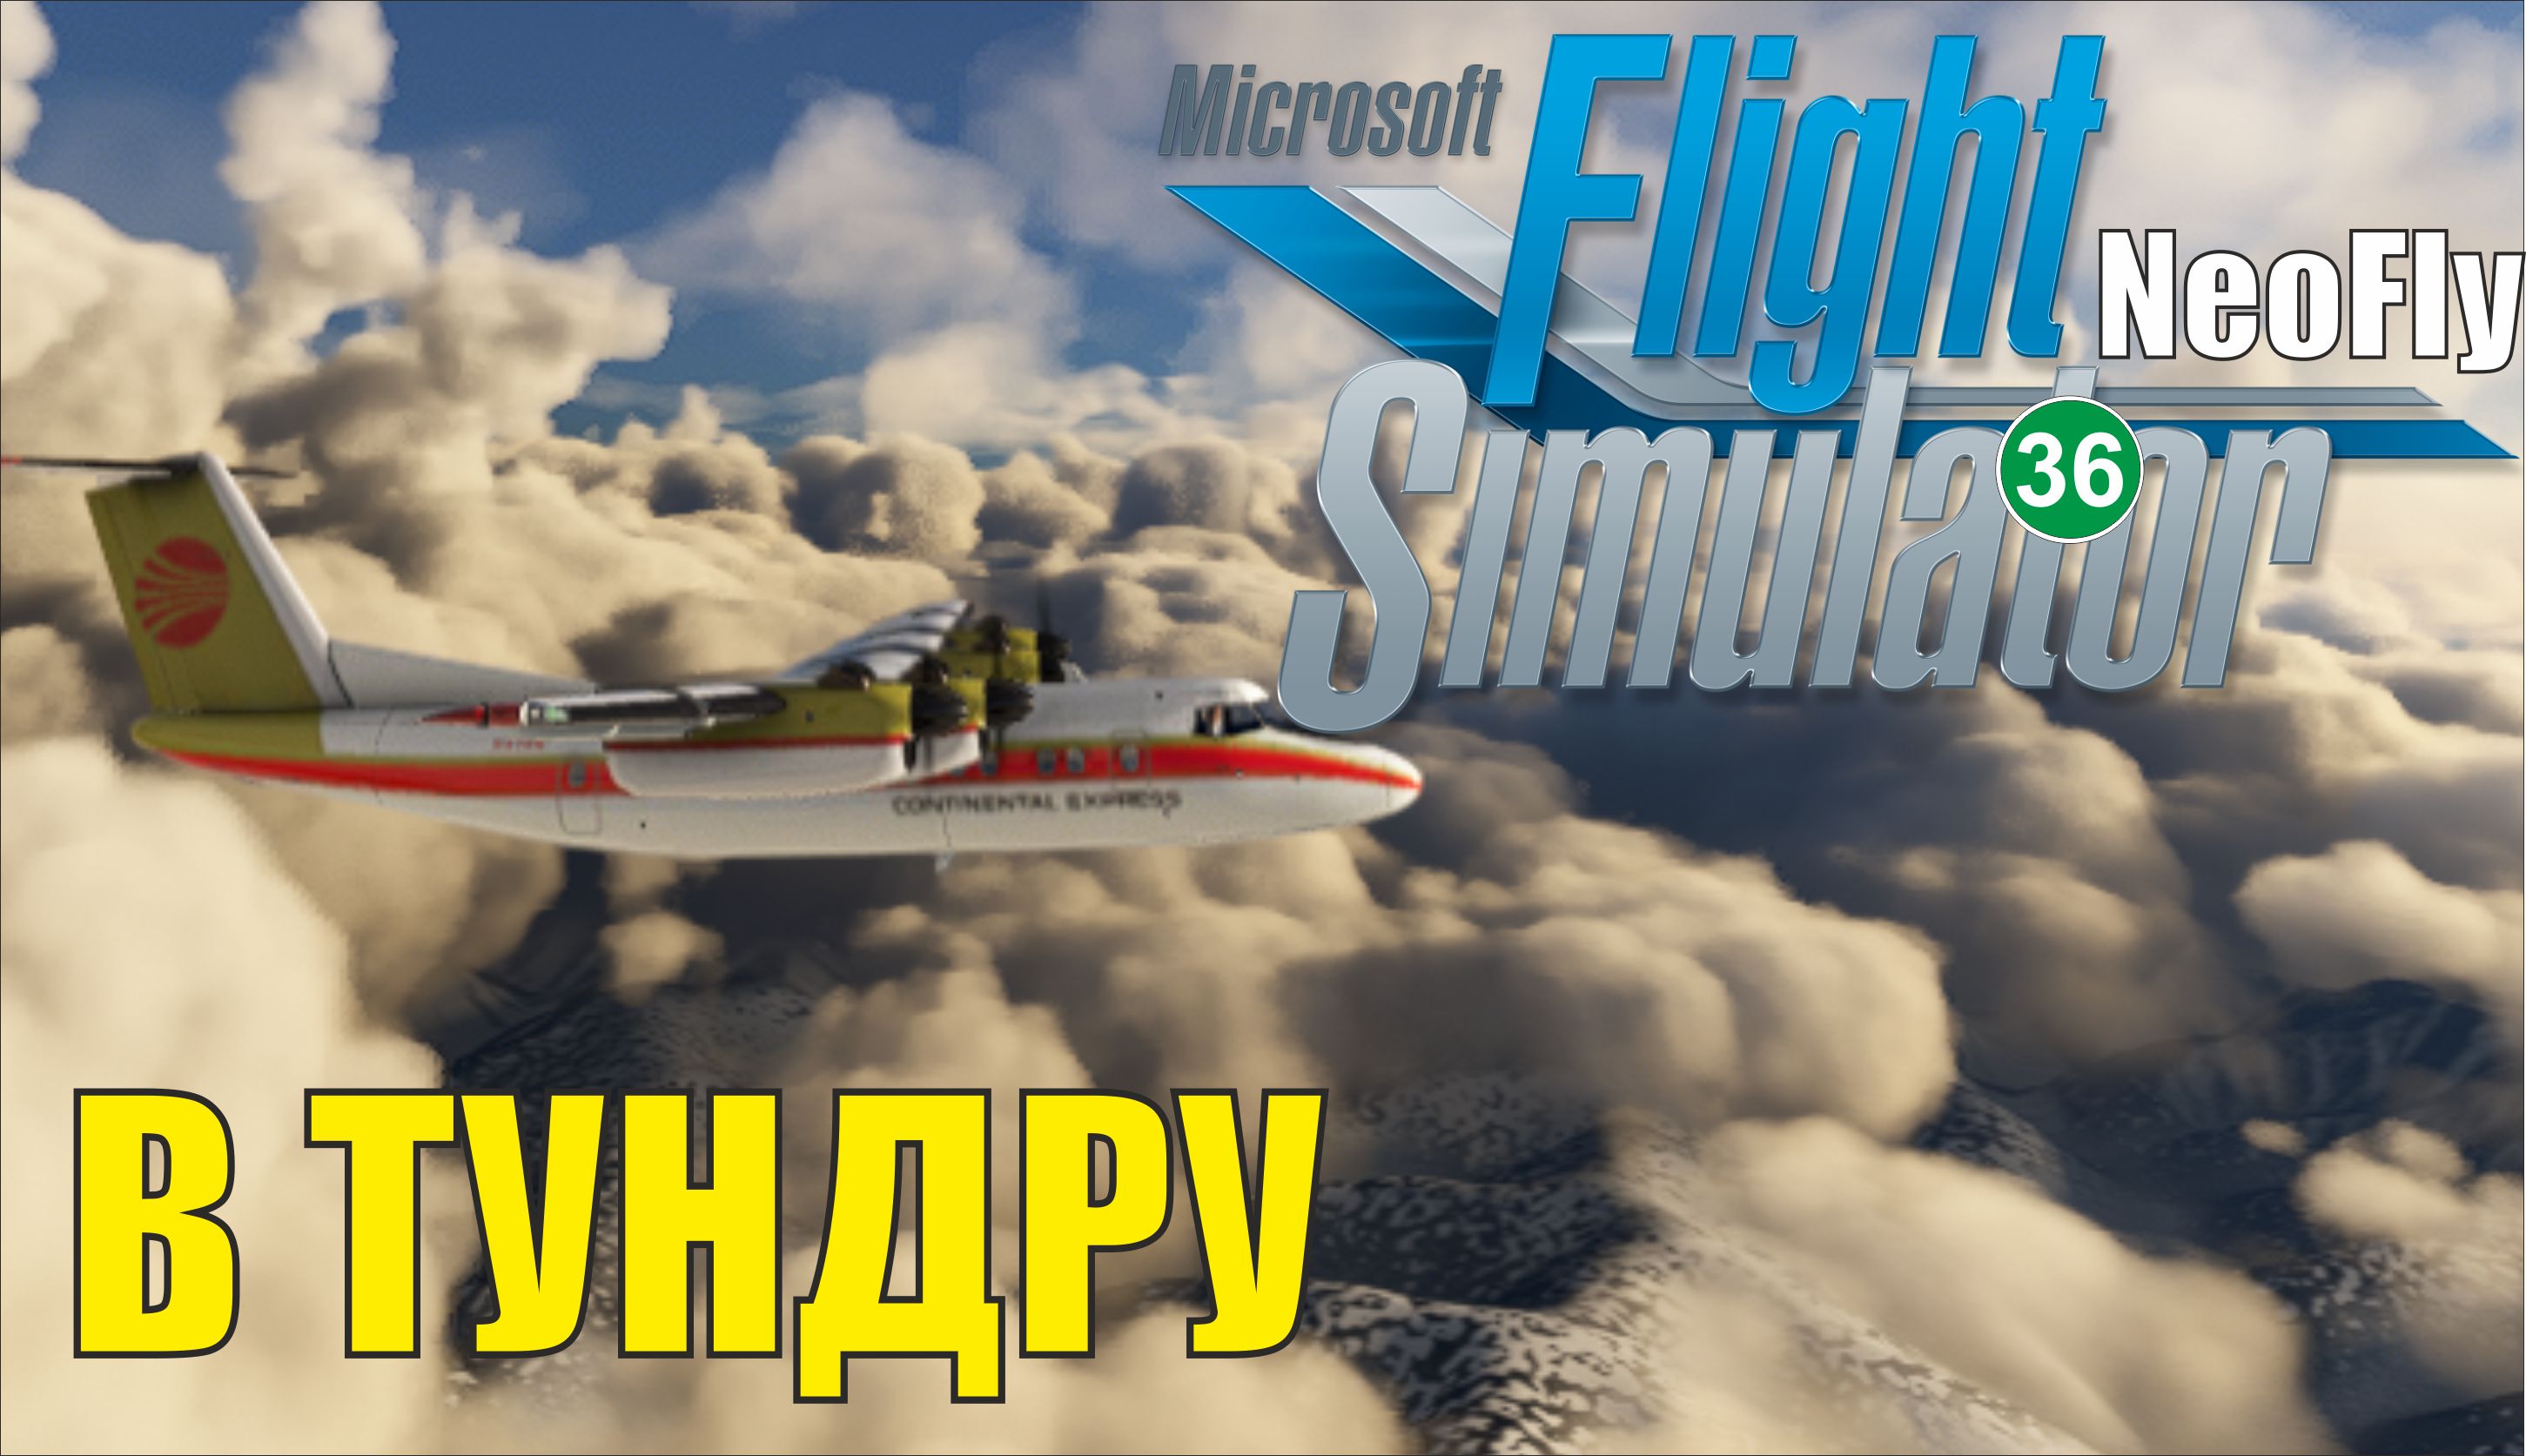 Microsoft Flight Simulator 2020 (NeoFly) - В тундру